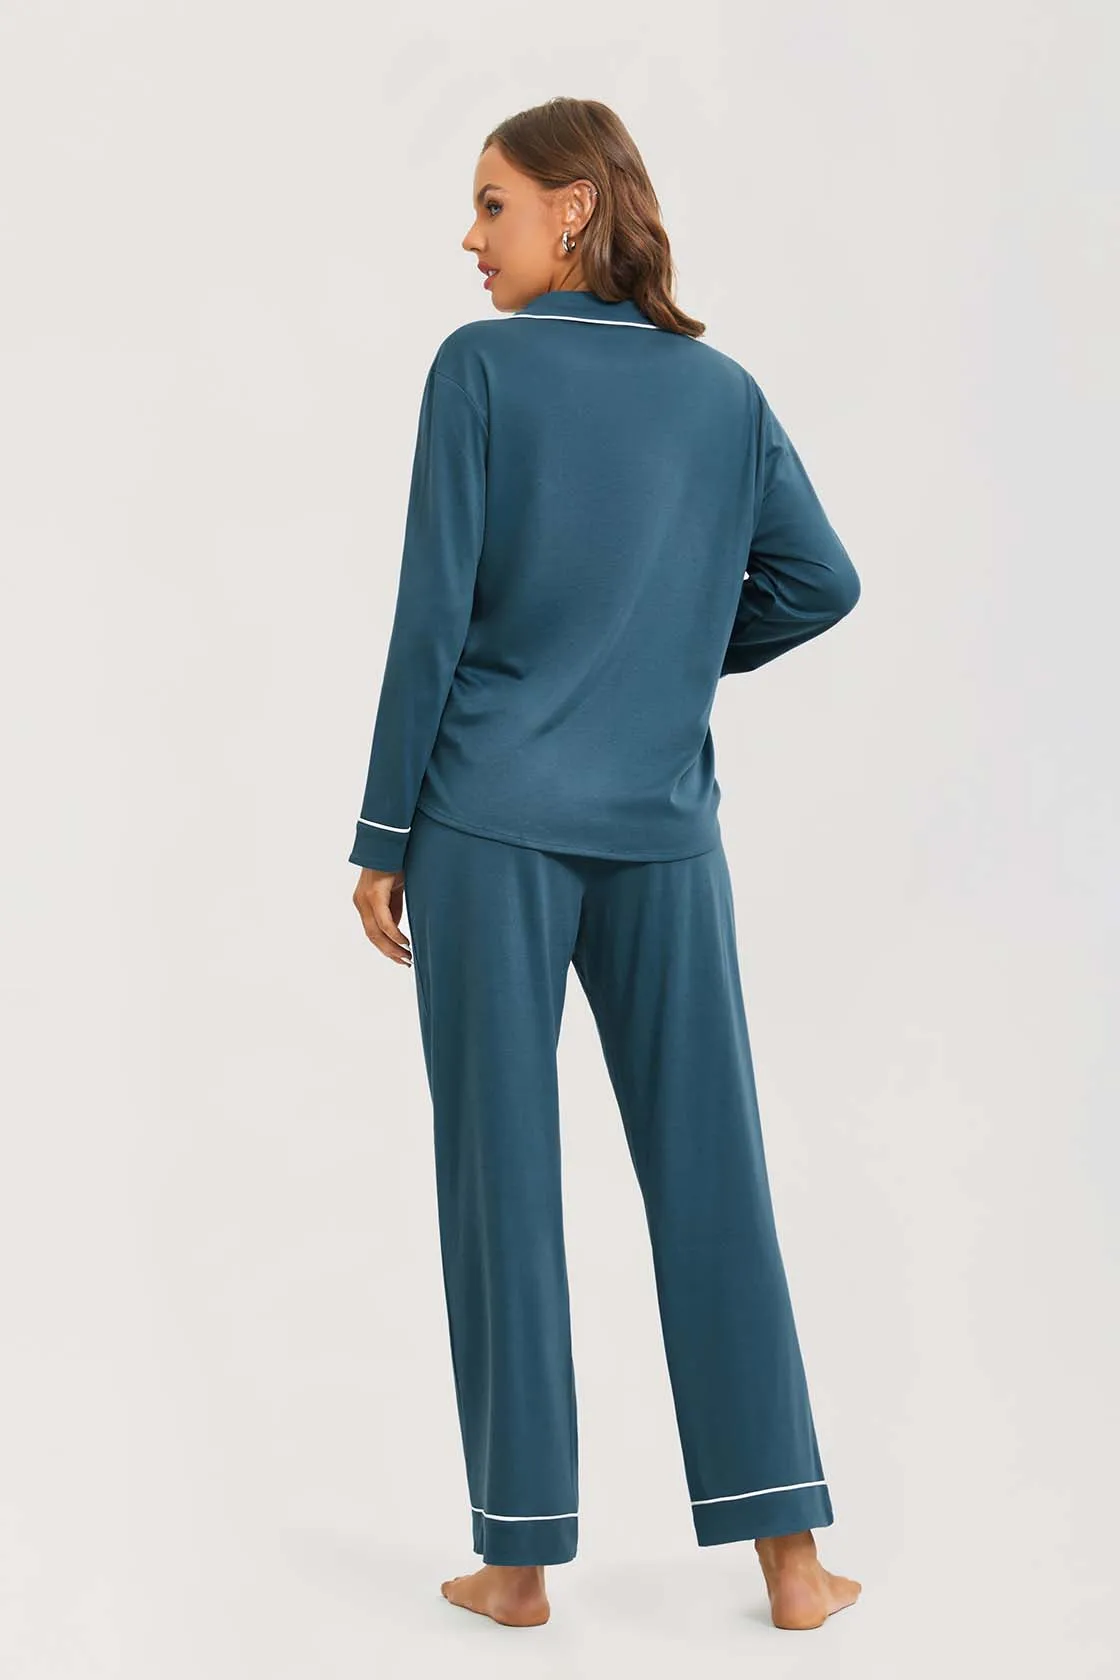 DOBREVA Women's Pajamas Set PJ Cotton Sleepwear Long Sleeve Pants 2 Piece  Soft Comfy Lounge Sets Loungewear Button Down